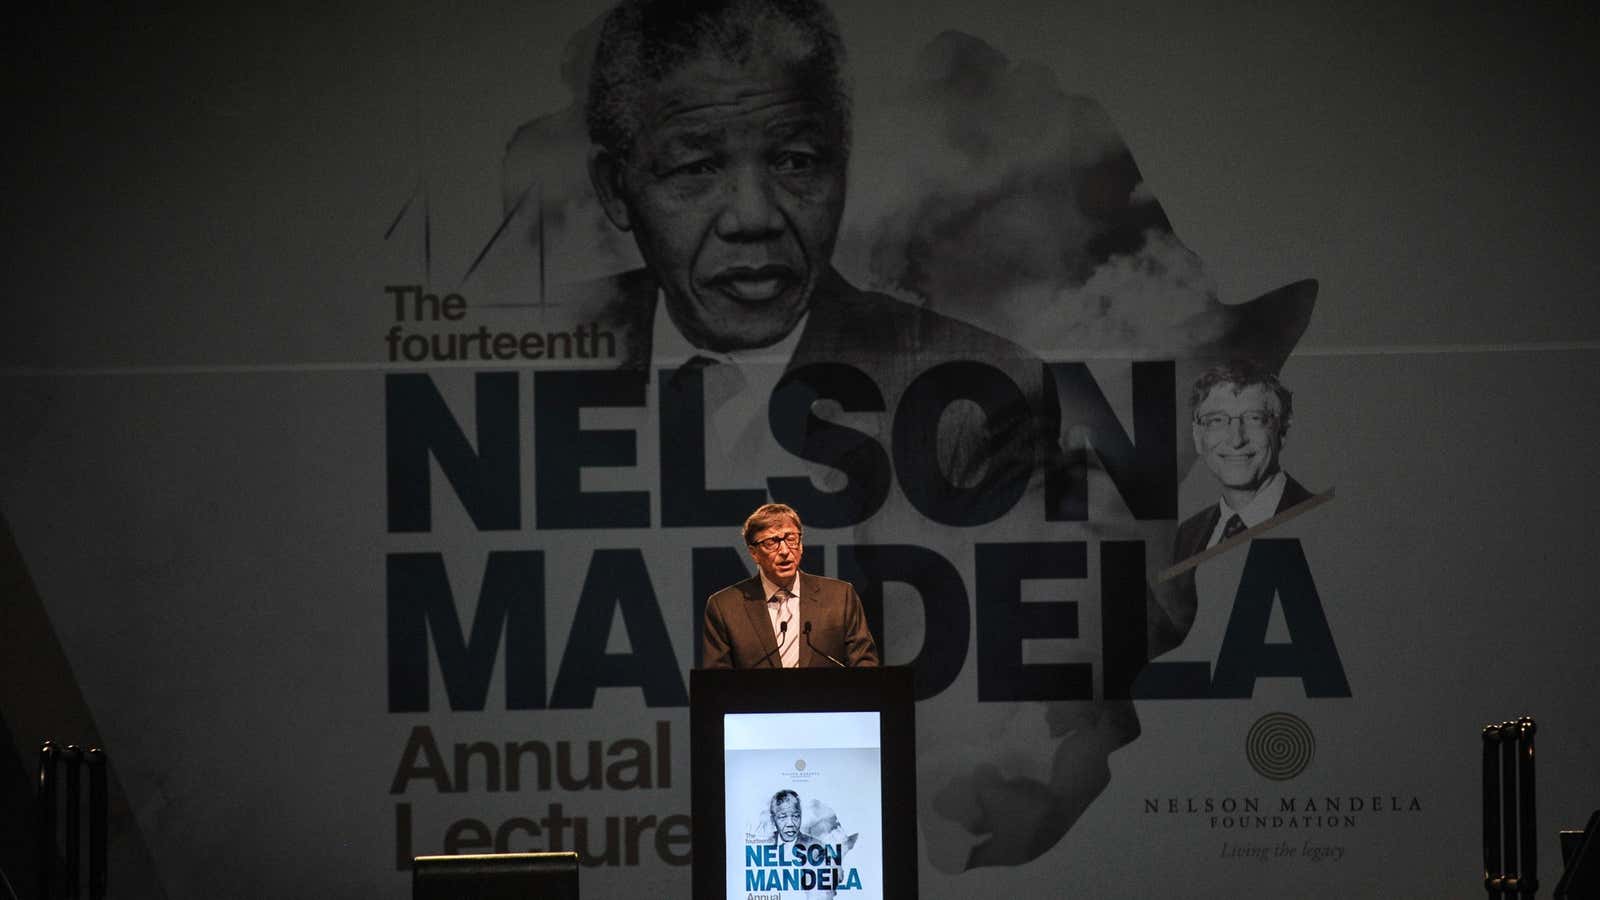 Continuing Mandela’s legacy.